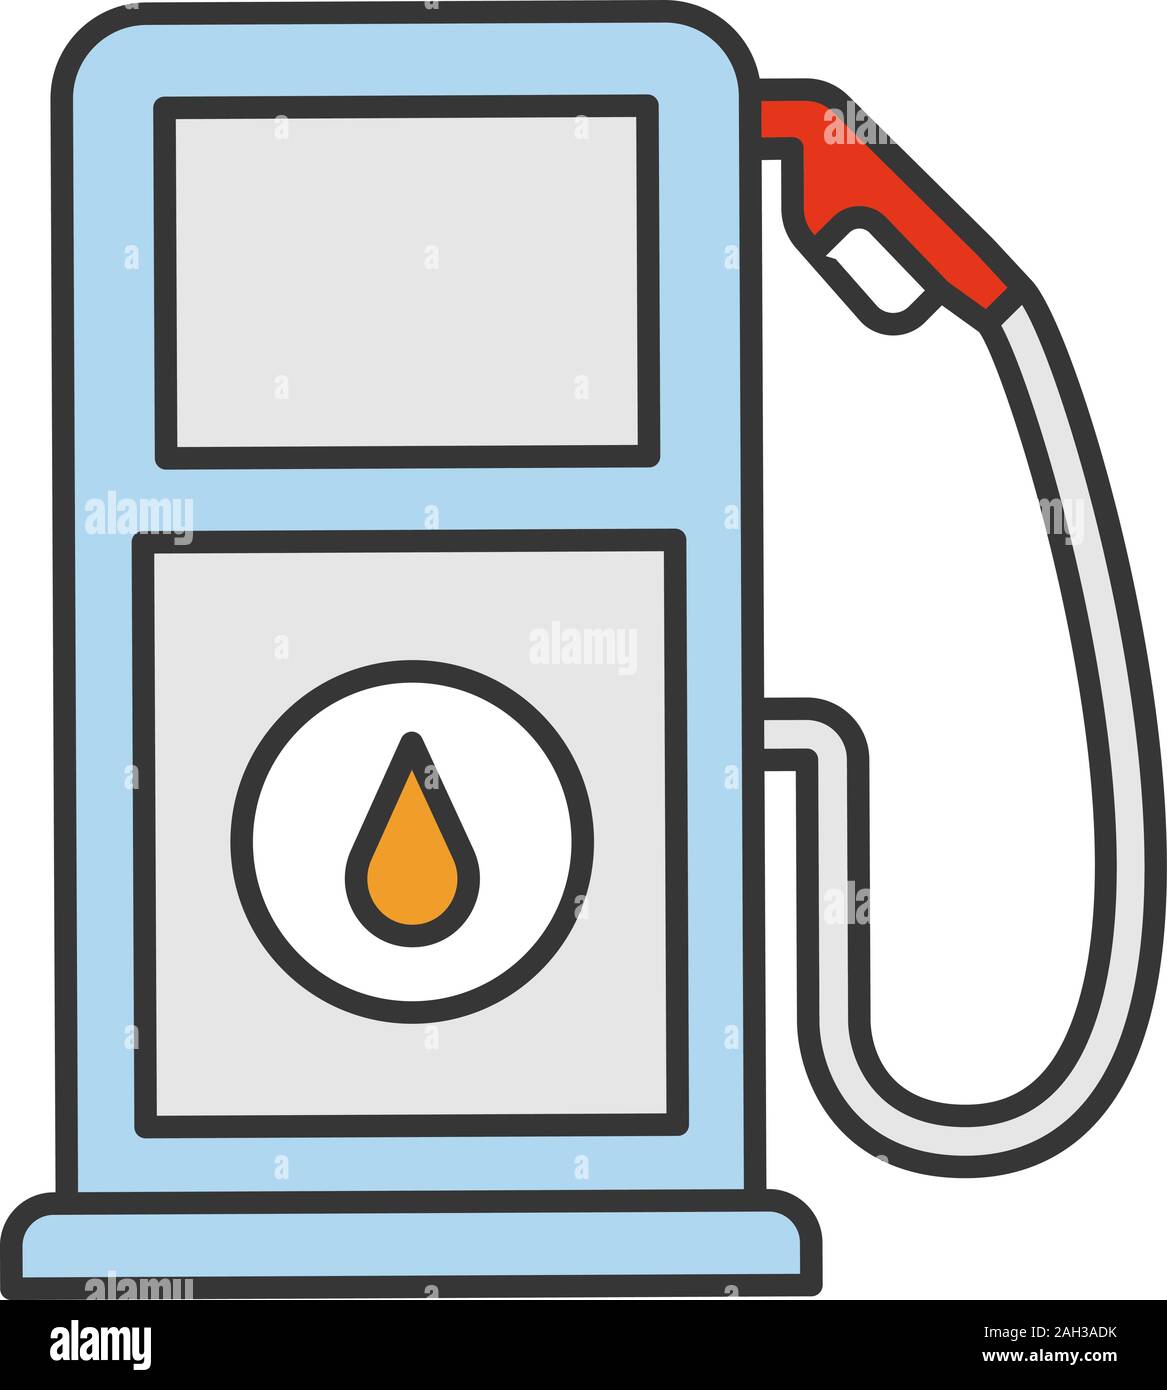 1,225 Petrol Pump Sketch Images, Stock Photos & Vectors | Shutterstock